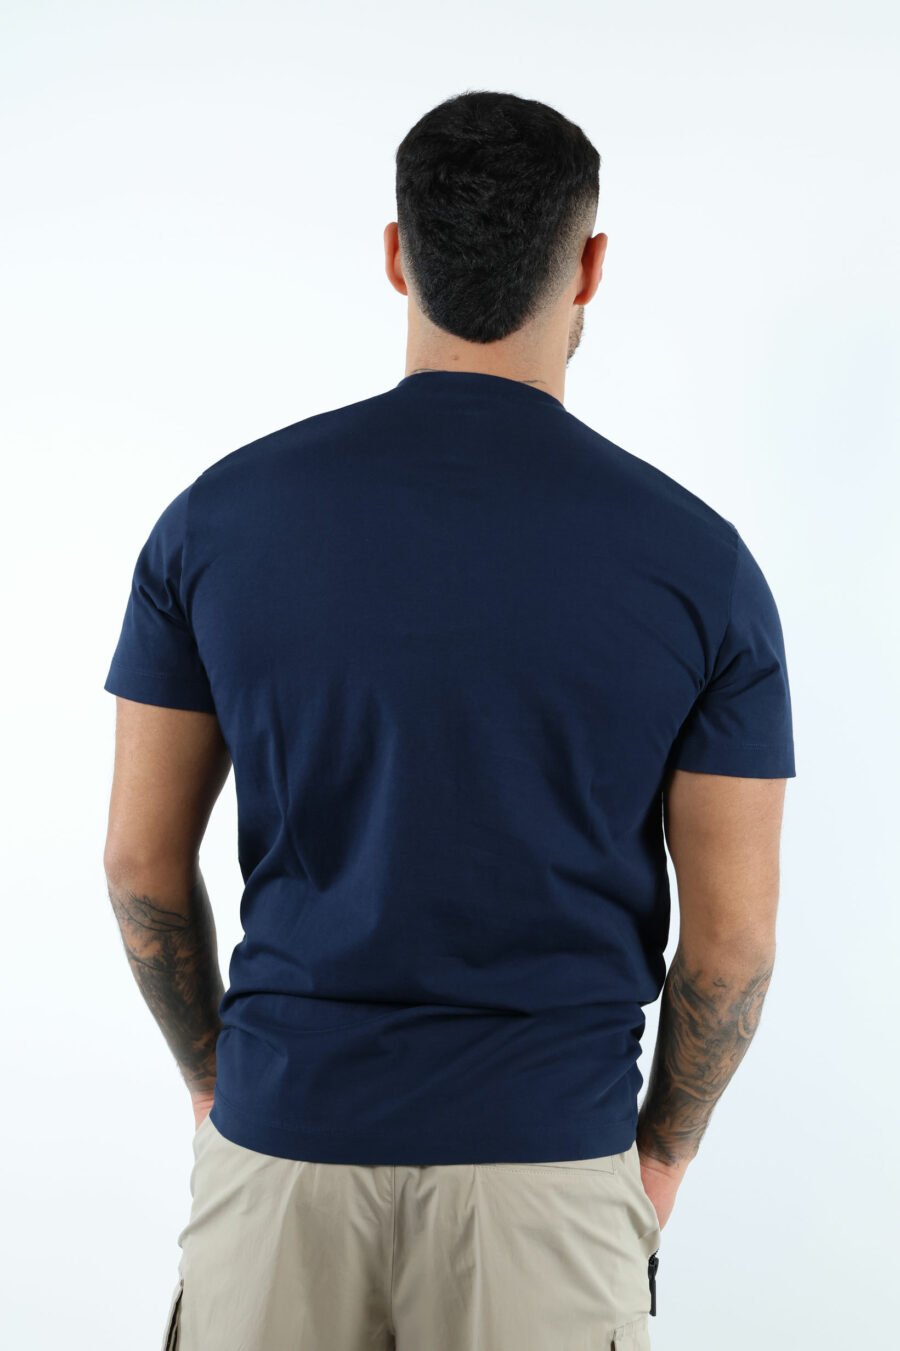 T-shirt azul escura com minilogo "ceresio 9, milano" - 107101